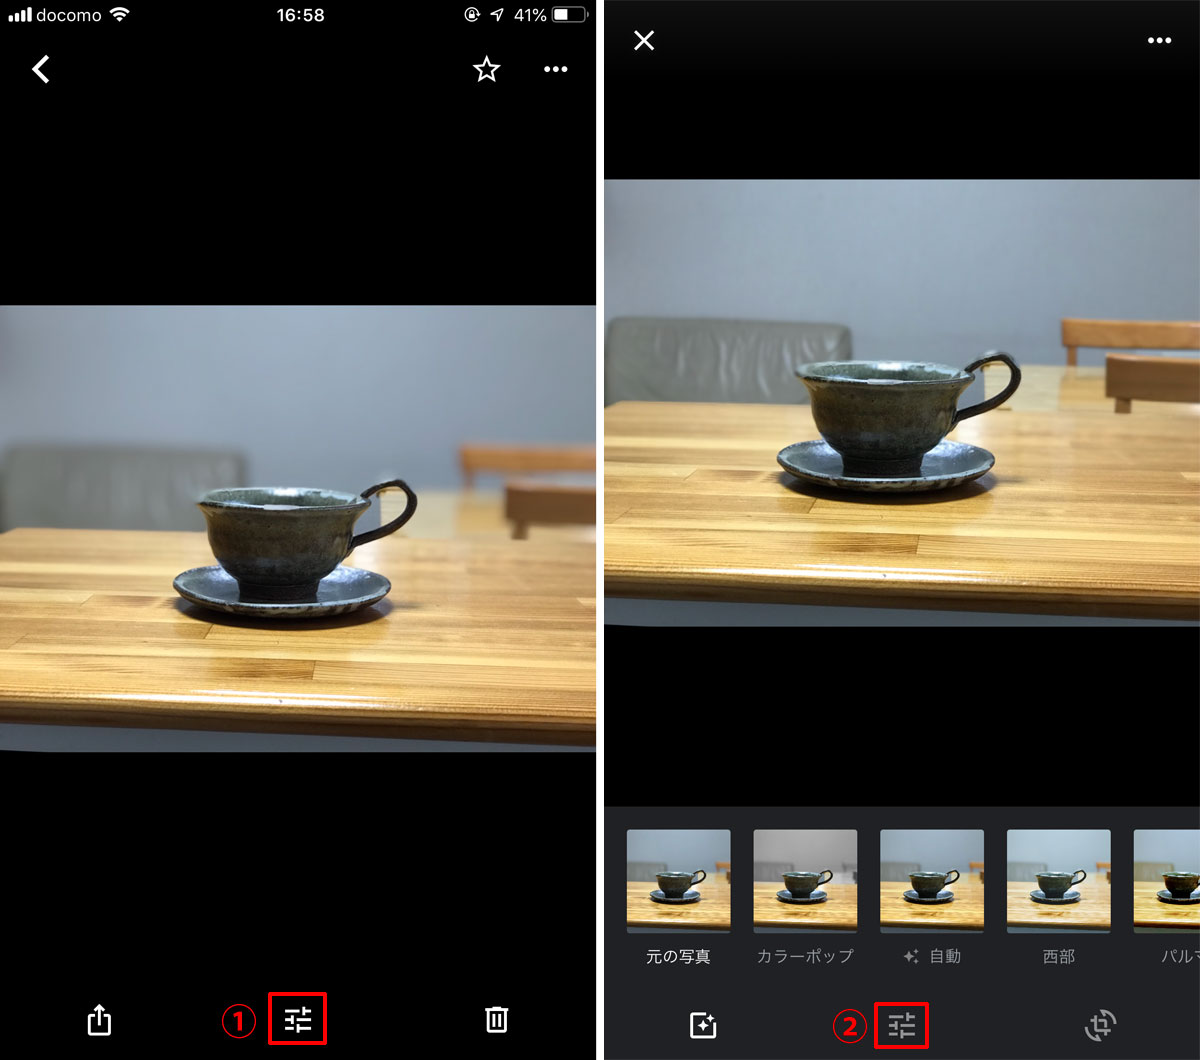 「Googleフォト」アプリで、撮影後にボケ具合を調整するには、「編集」ボタンを2回タップする